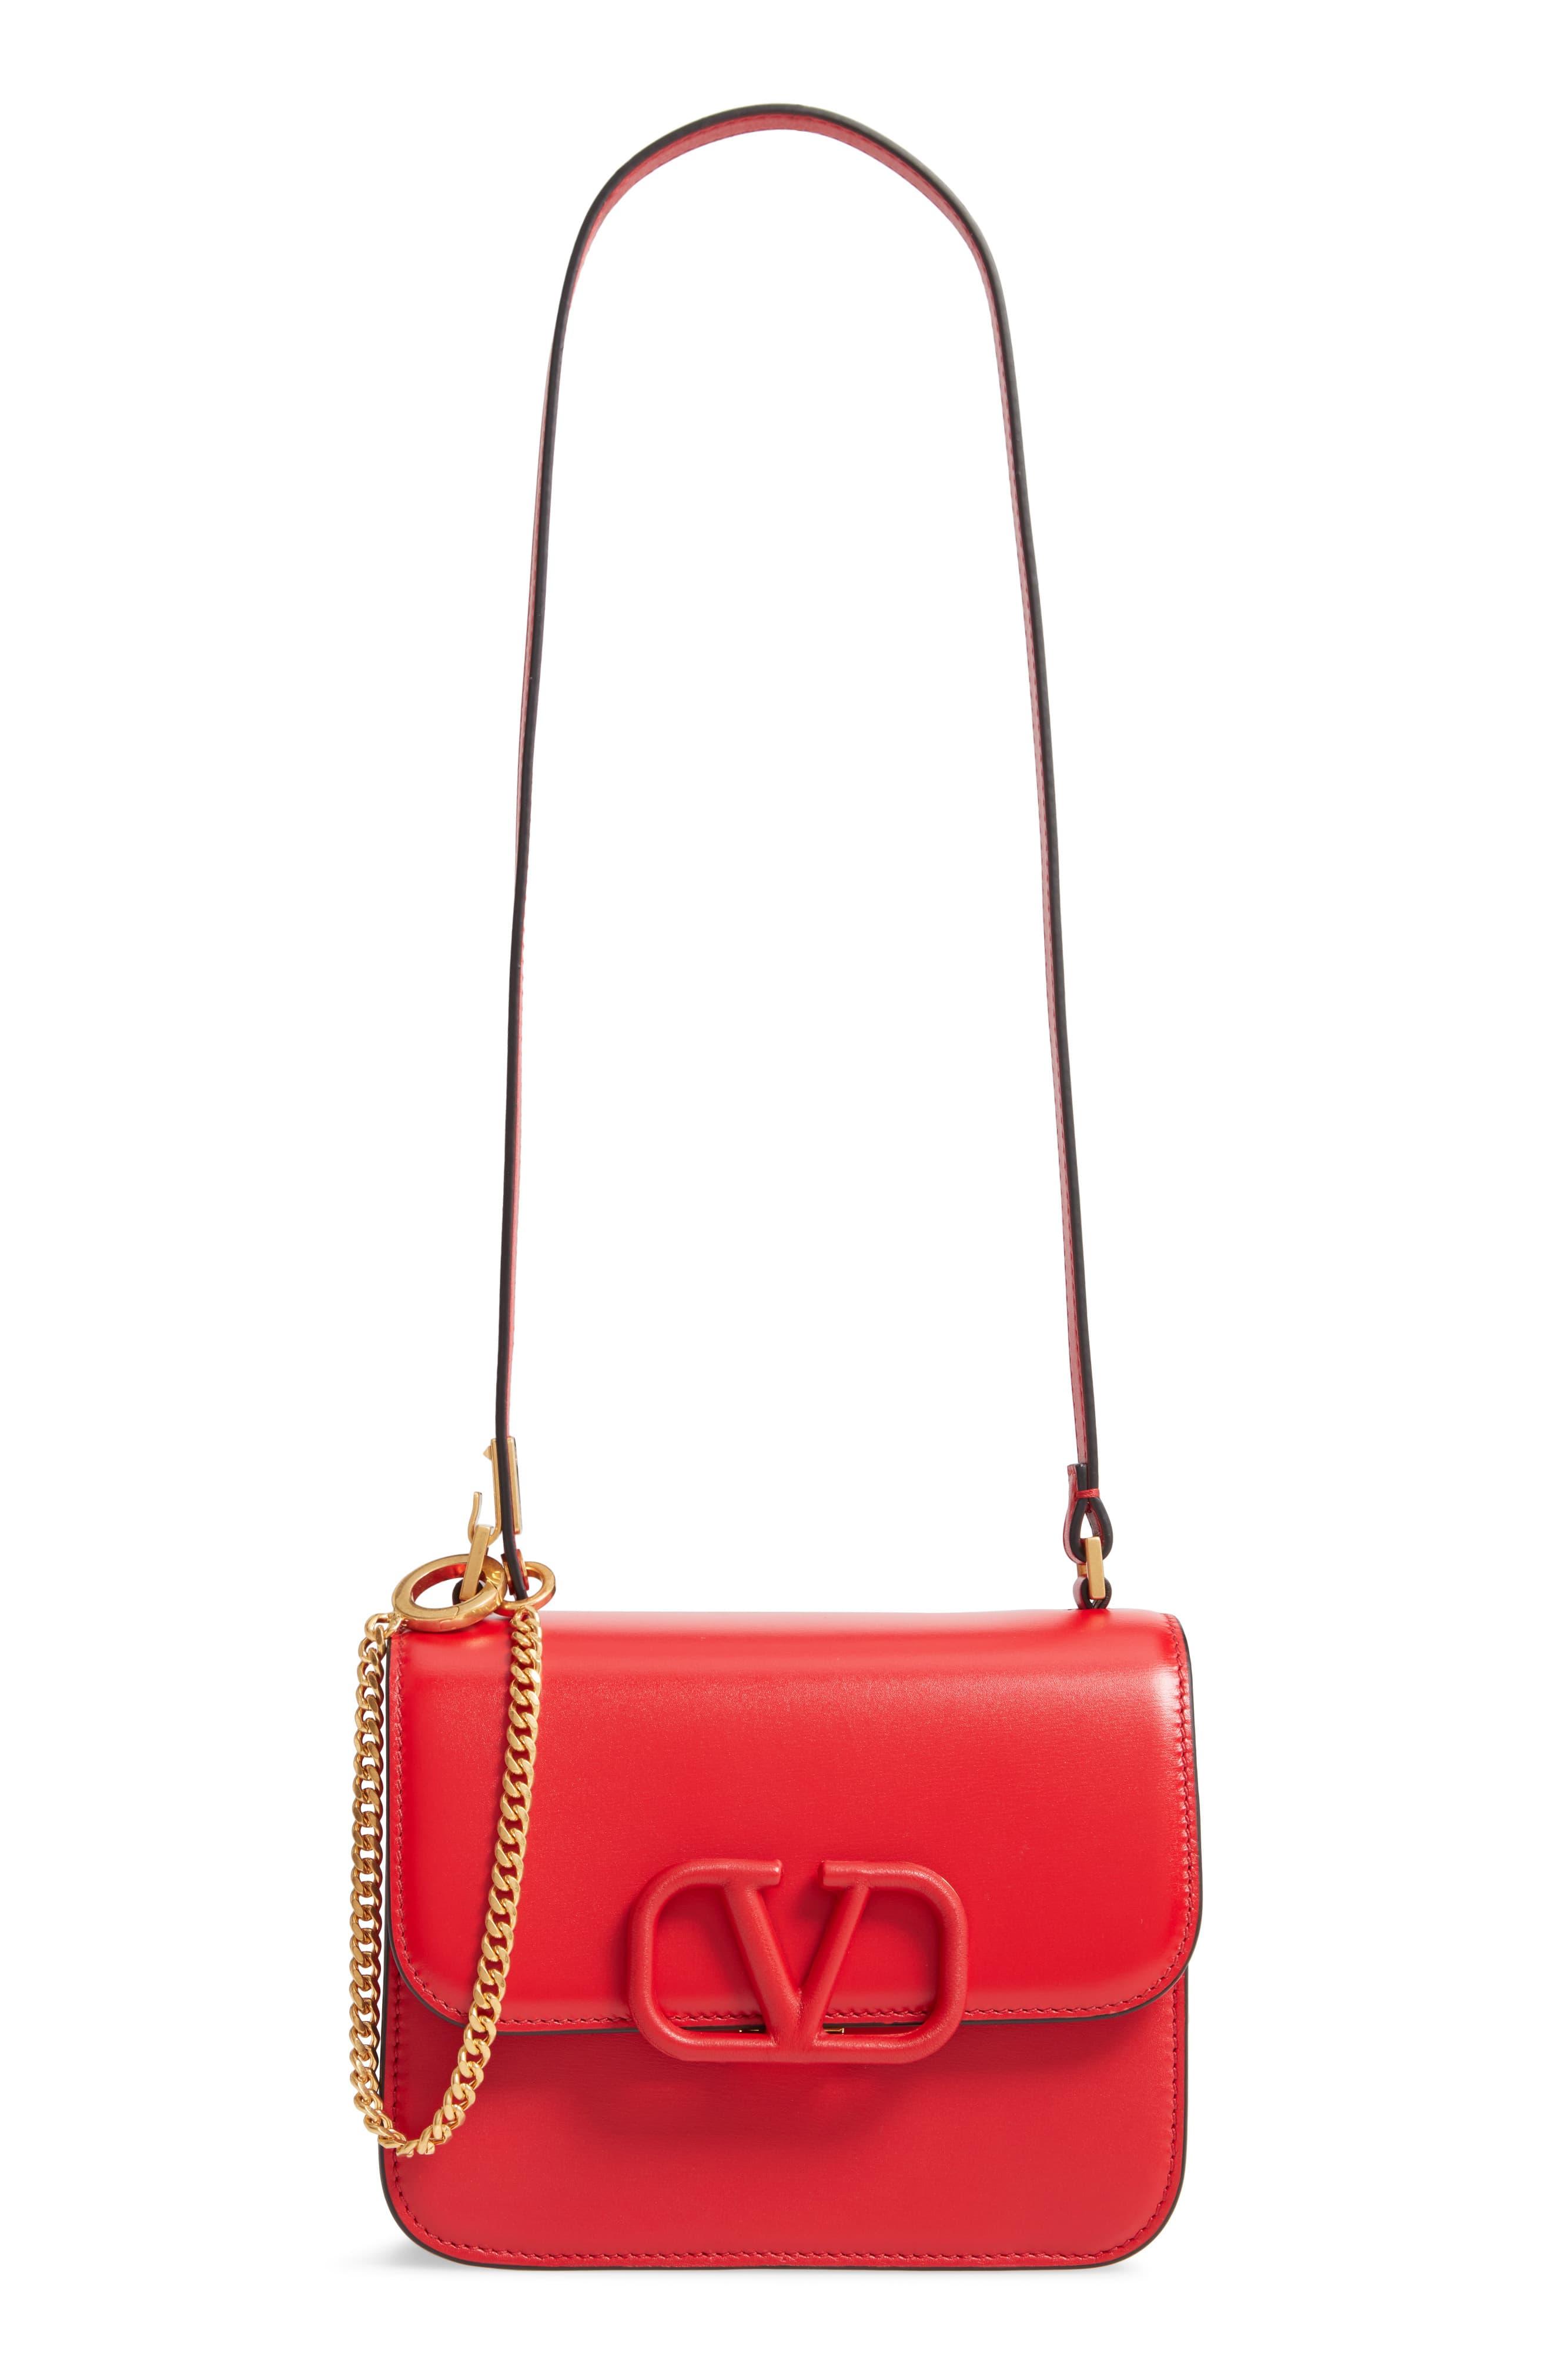 Valentino Garavani Leather Small Vsling Shoulder Bag in Deep Red (Red